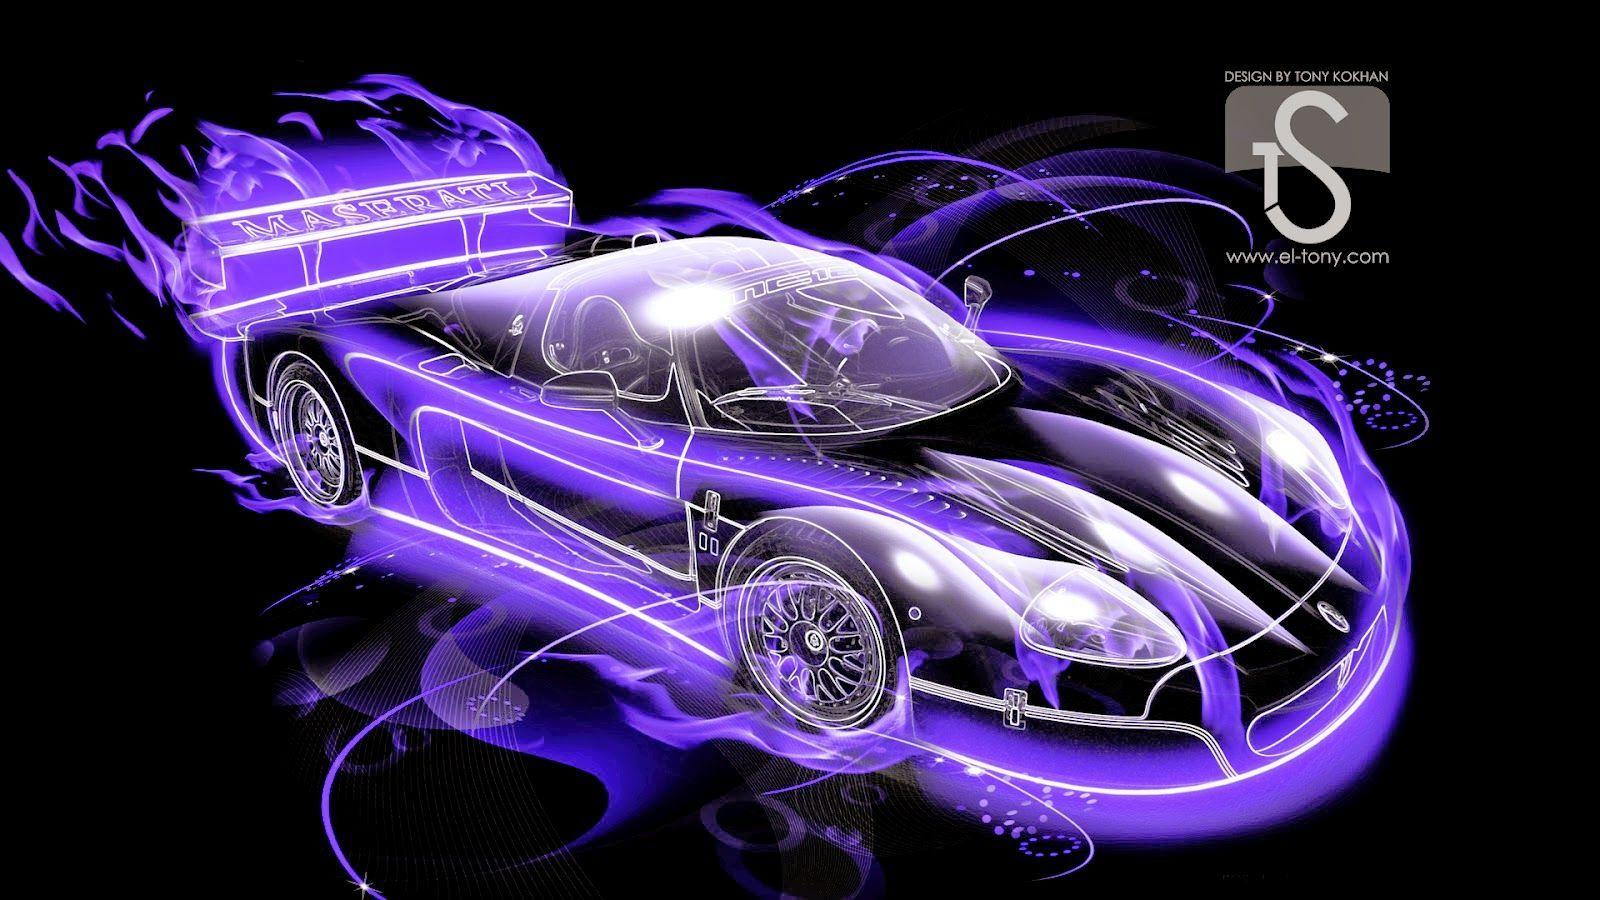 Fire 3D wallpaper of cars for desktop. Cool car picture, Cool wallpaper cars, Cool car wallpaper hd